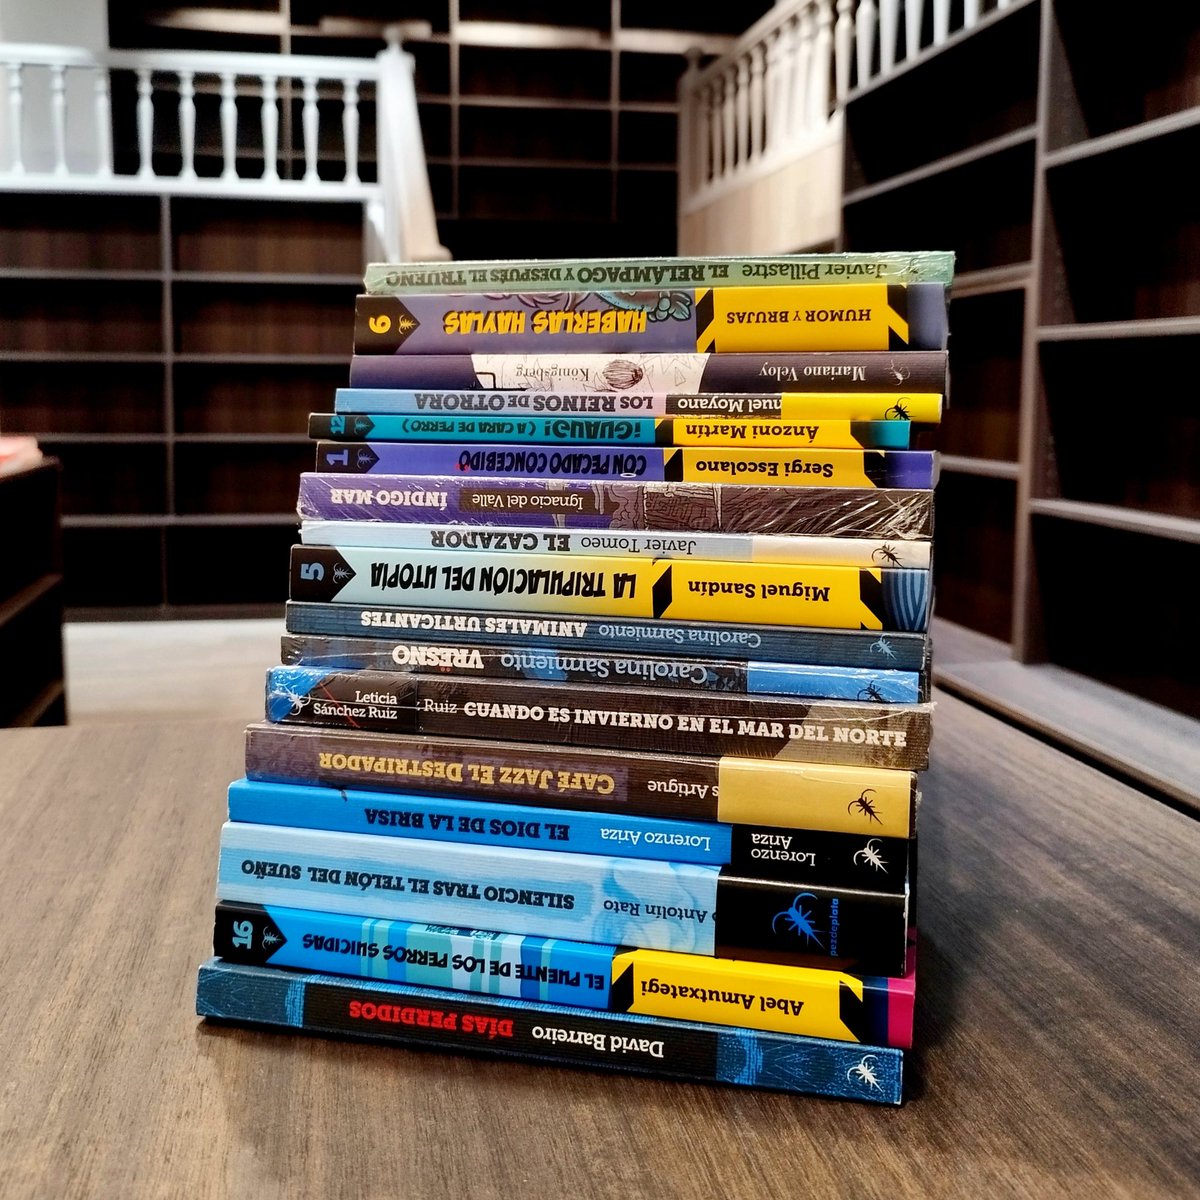 Todo al azul en los primeros libros de @mataderounolib 💣💥

#mataderouno #libreríaojanguren #librería #devoralibros #quetefolleunpez #pezdeplata